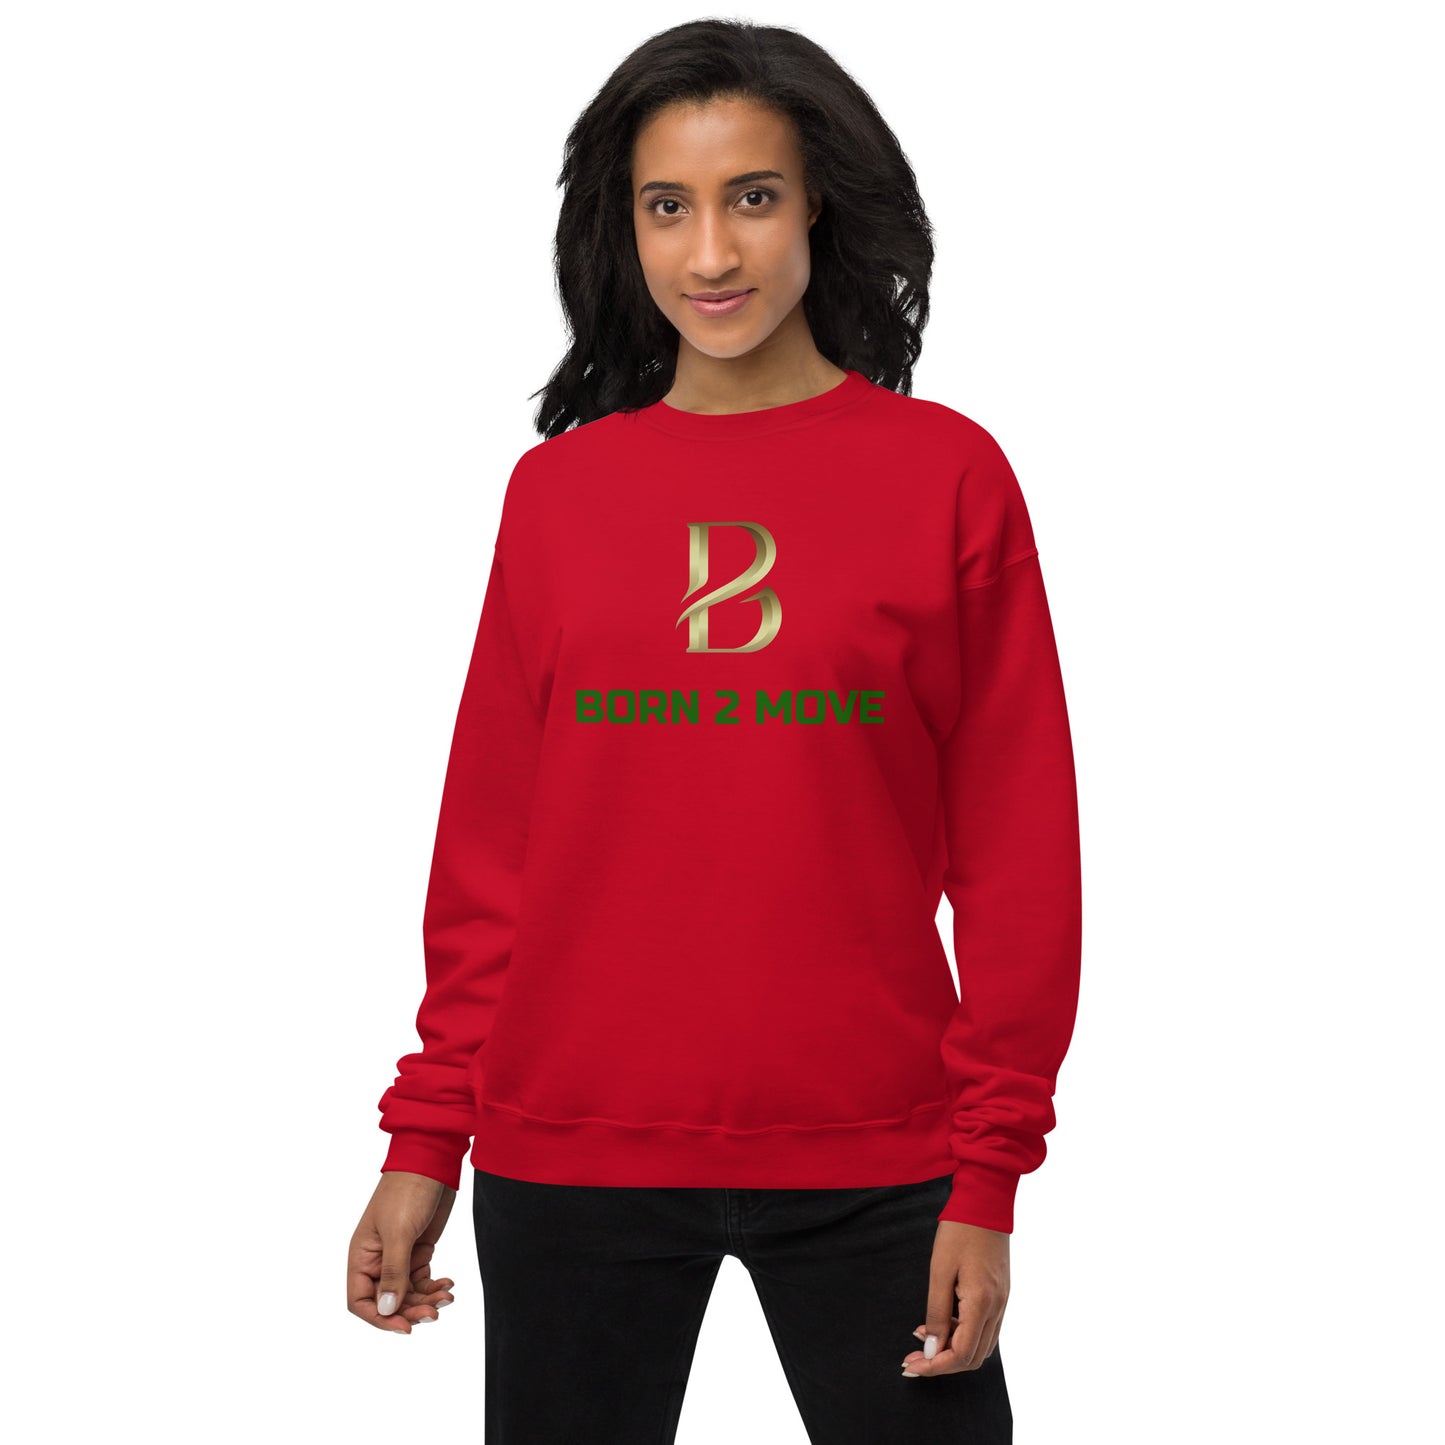 Gold Logo "Born 2 Move" fleece sweatshirt